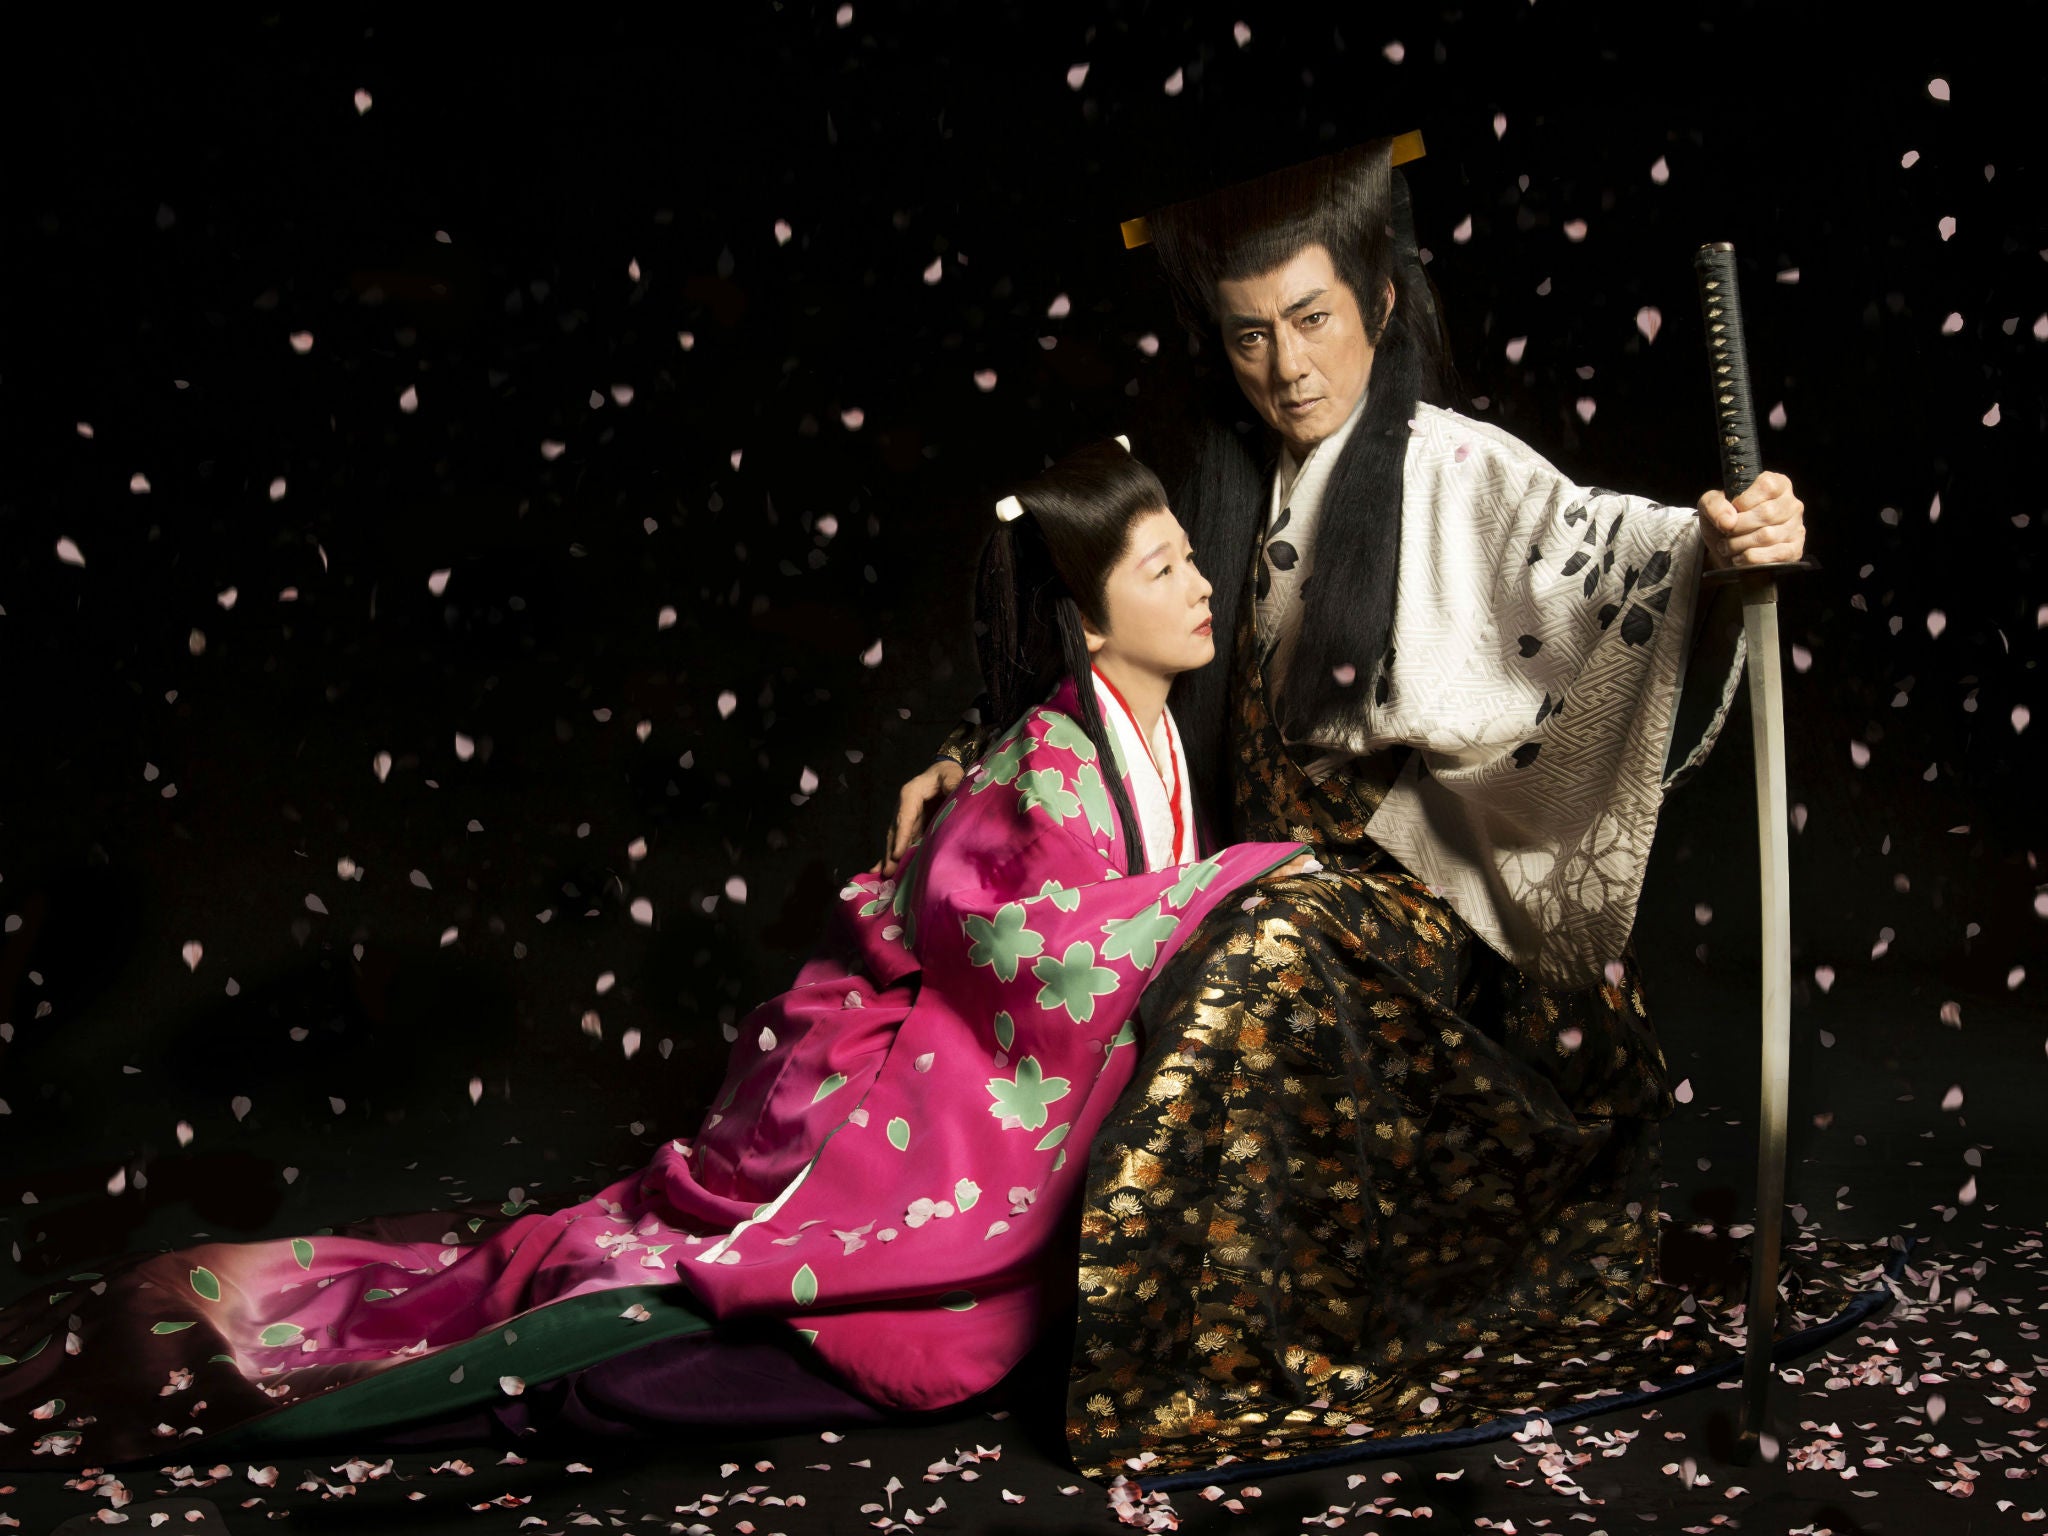 Masachika Ichimura as Macbeth and Yuko Tanaka as Lady Macbeth in the Ninagawa Company's 'Macbeth' at the Barbican